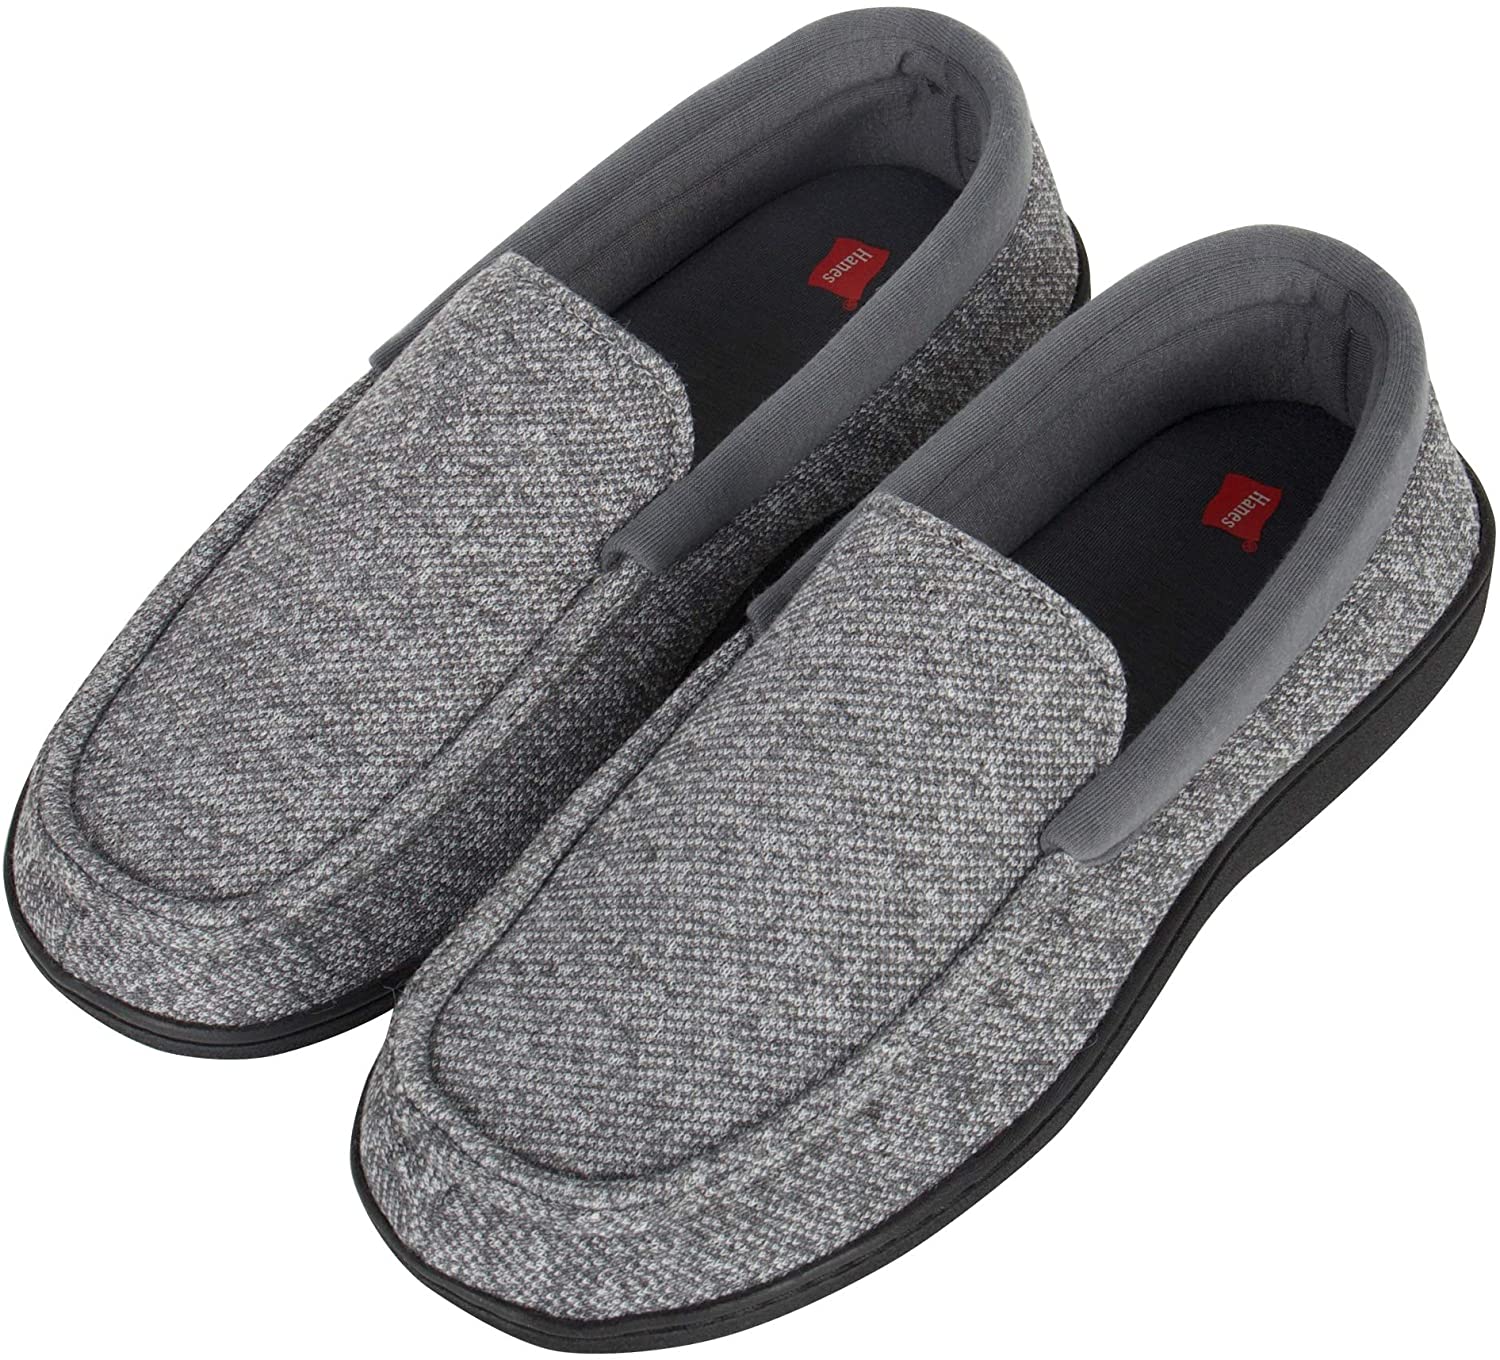 Hanes Men's Slippers House Shoes Moccasin Comfort Memory Foam, Grey ...